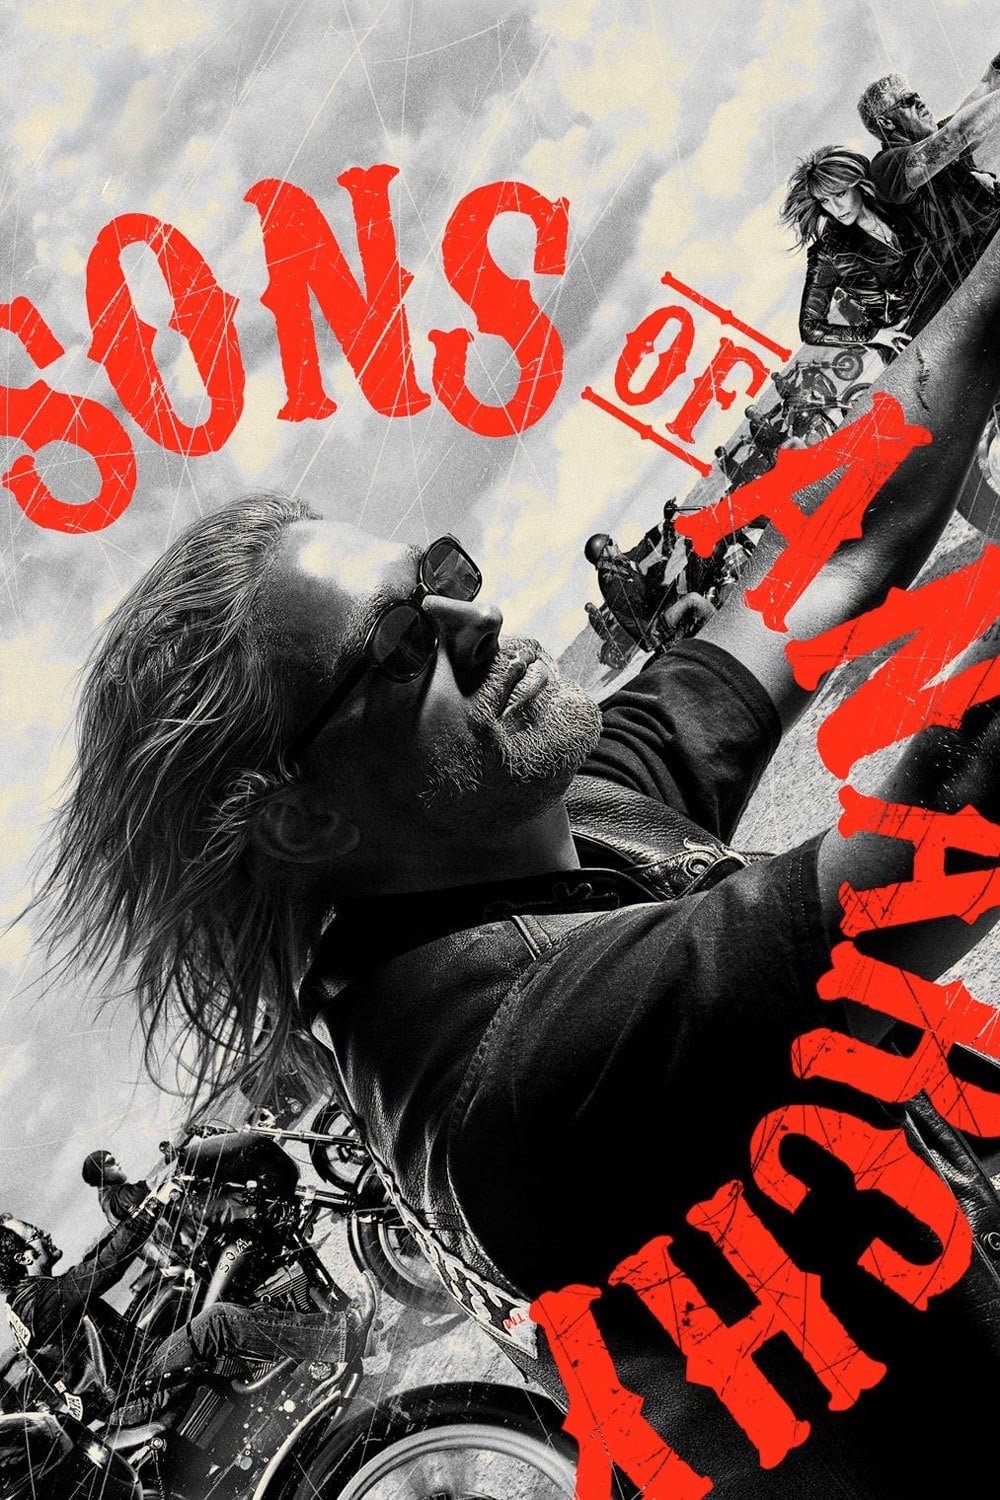 Sons of Anarchy (2008 - 2014) Seizoen 1 Disc 3 BD50